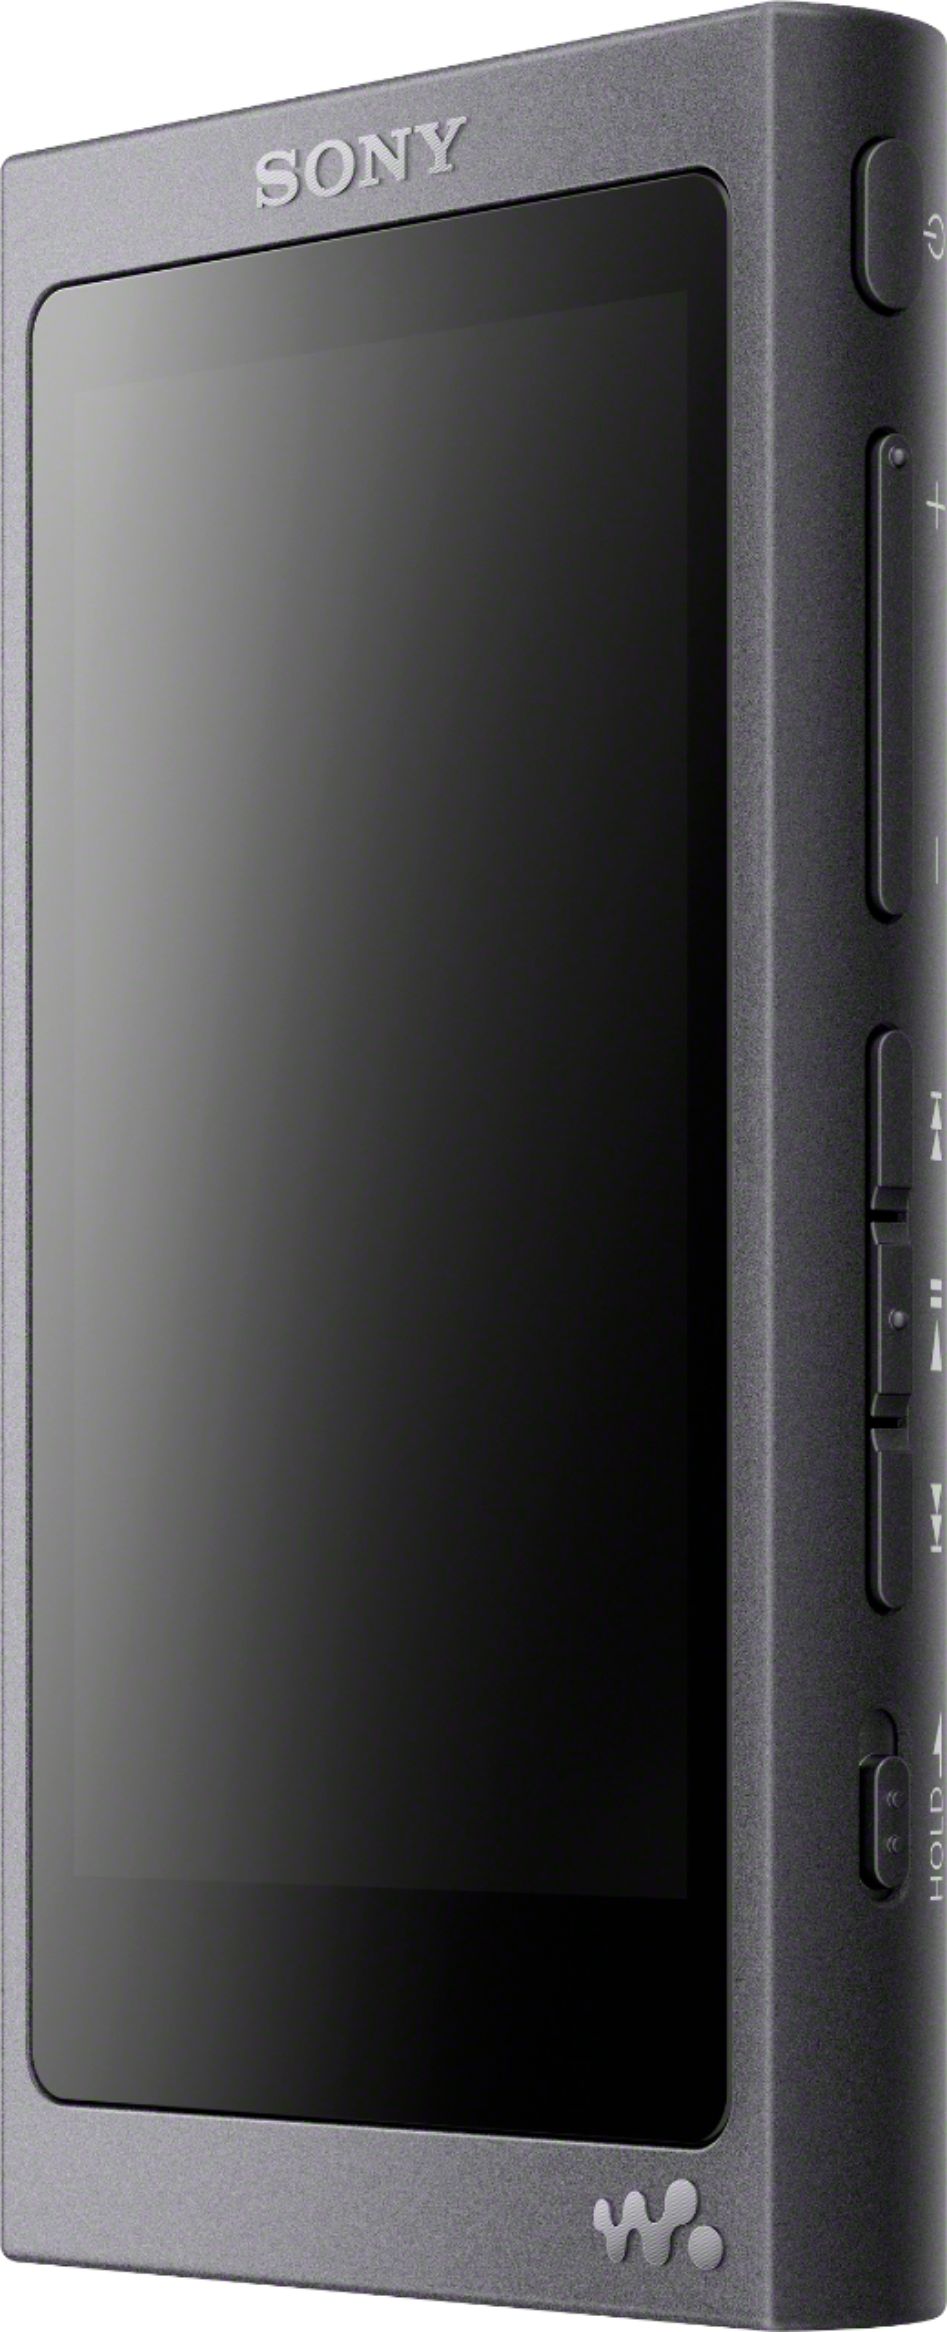 Sony Walkman Hi-Res NW-A45 16GB* MP3 Player  - Best Buy